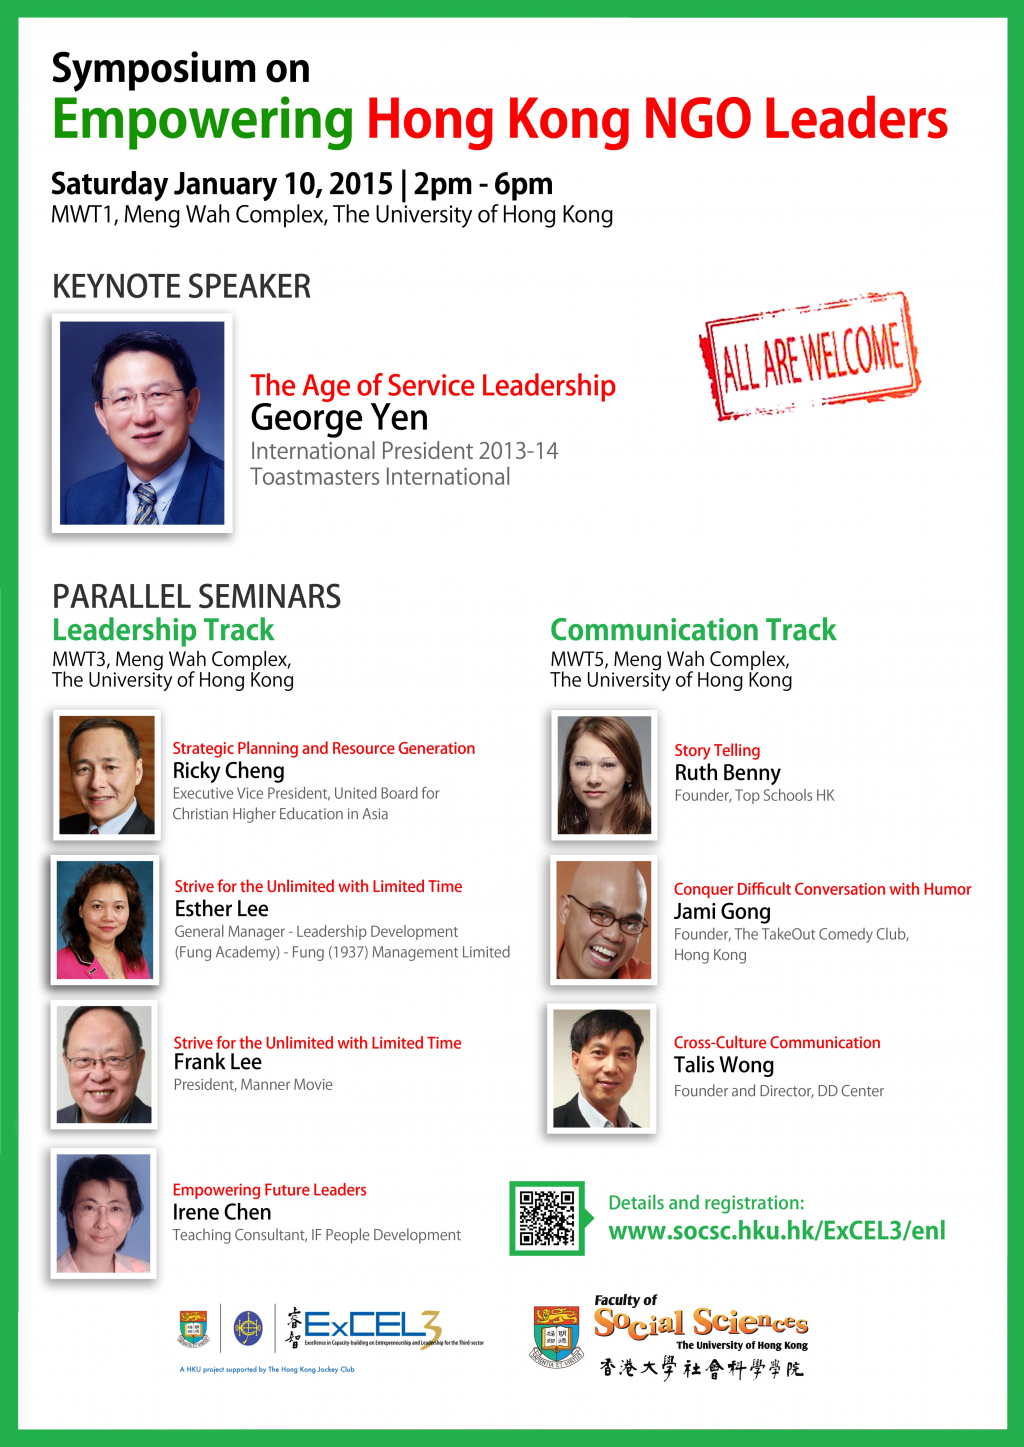 Symposium on Empowering Hong Kong NGO Leaders